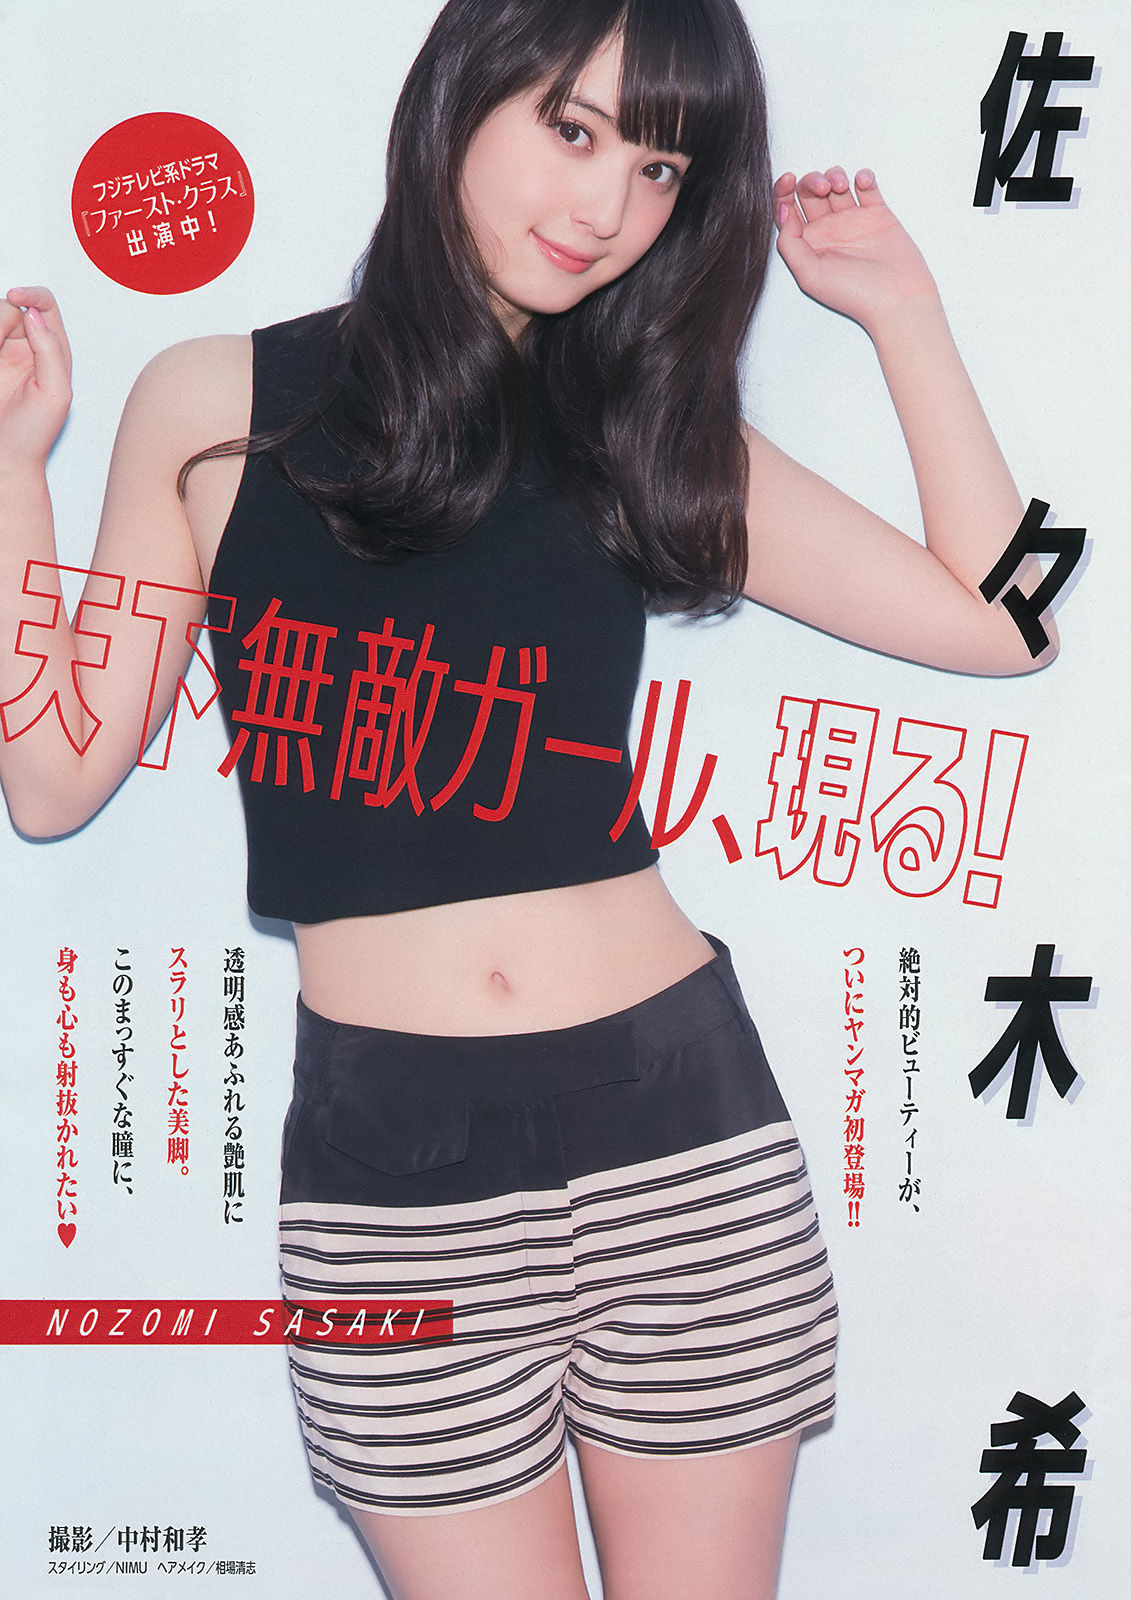 [Young Magazine]杂志:佐佐木希高品质写真作品个人分享(12P)